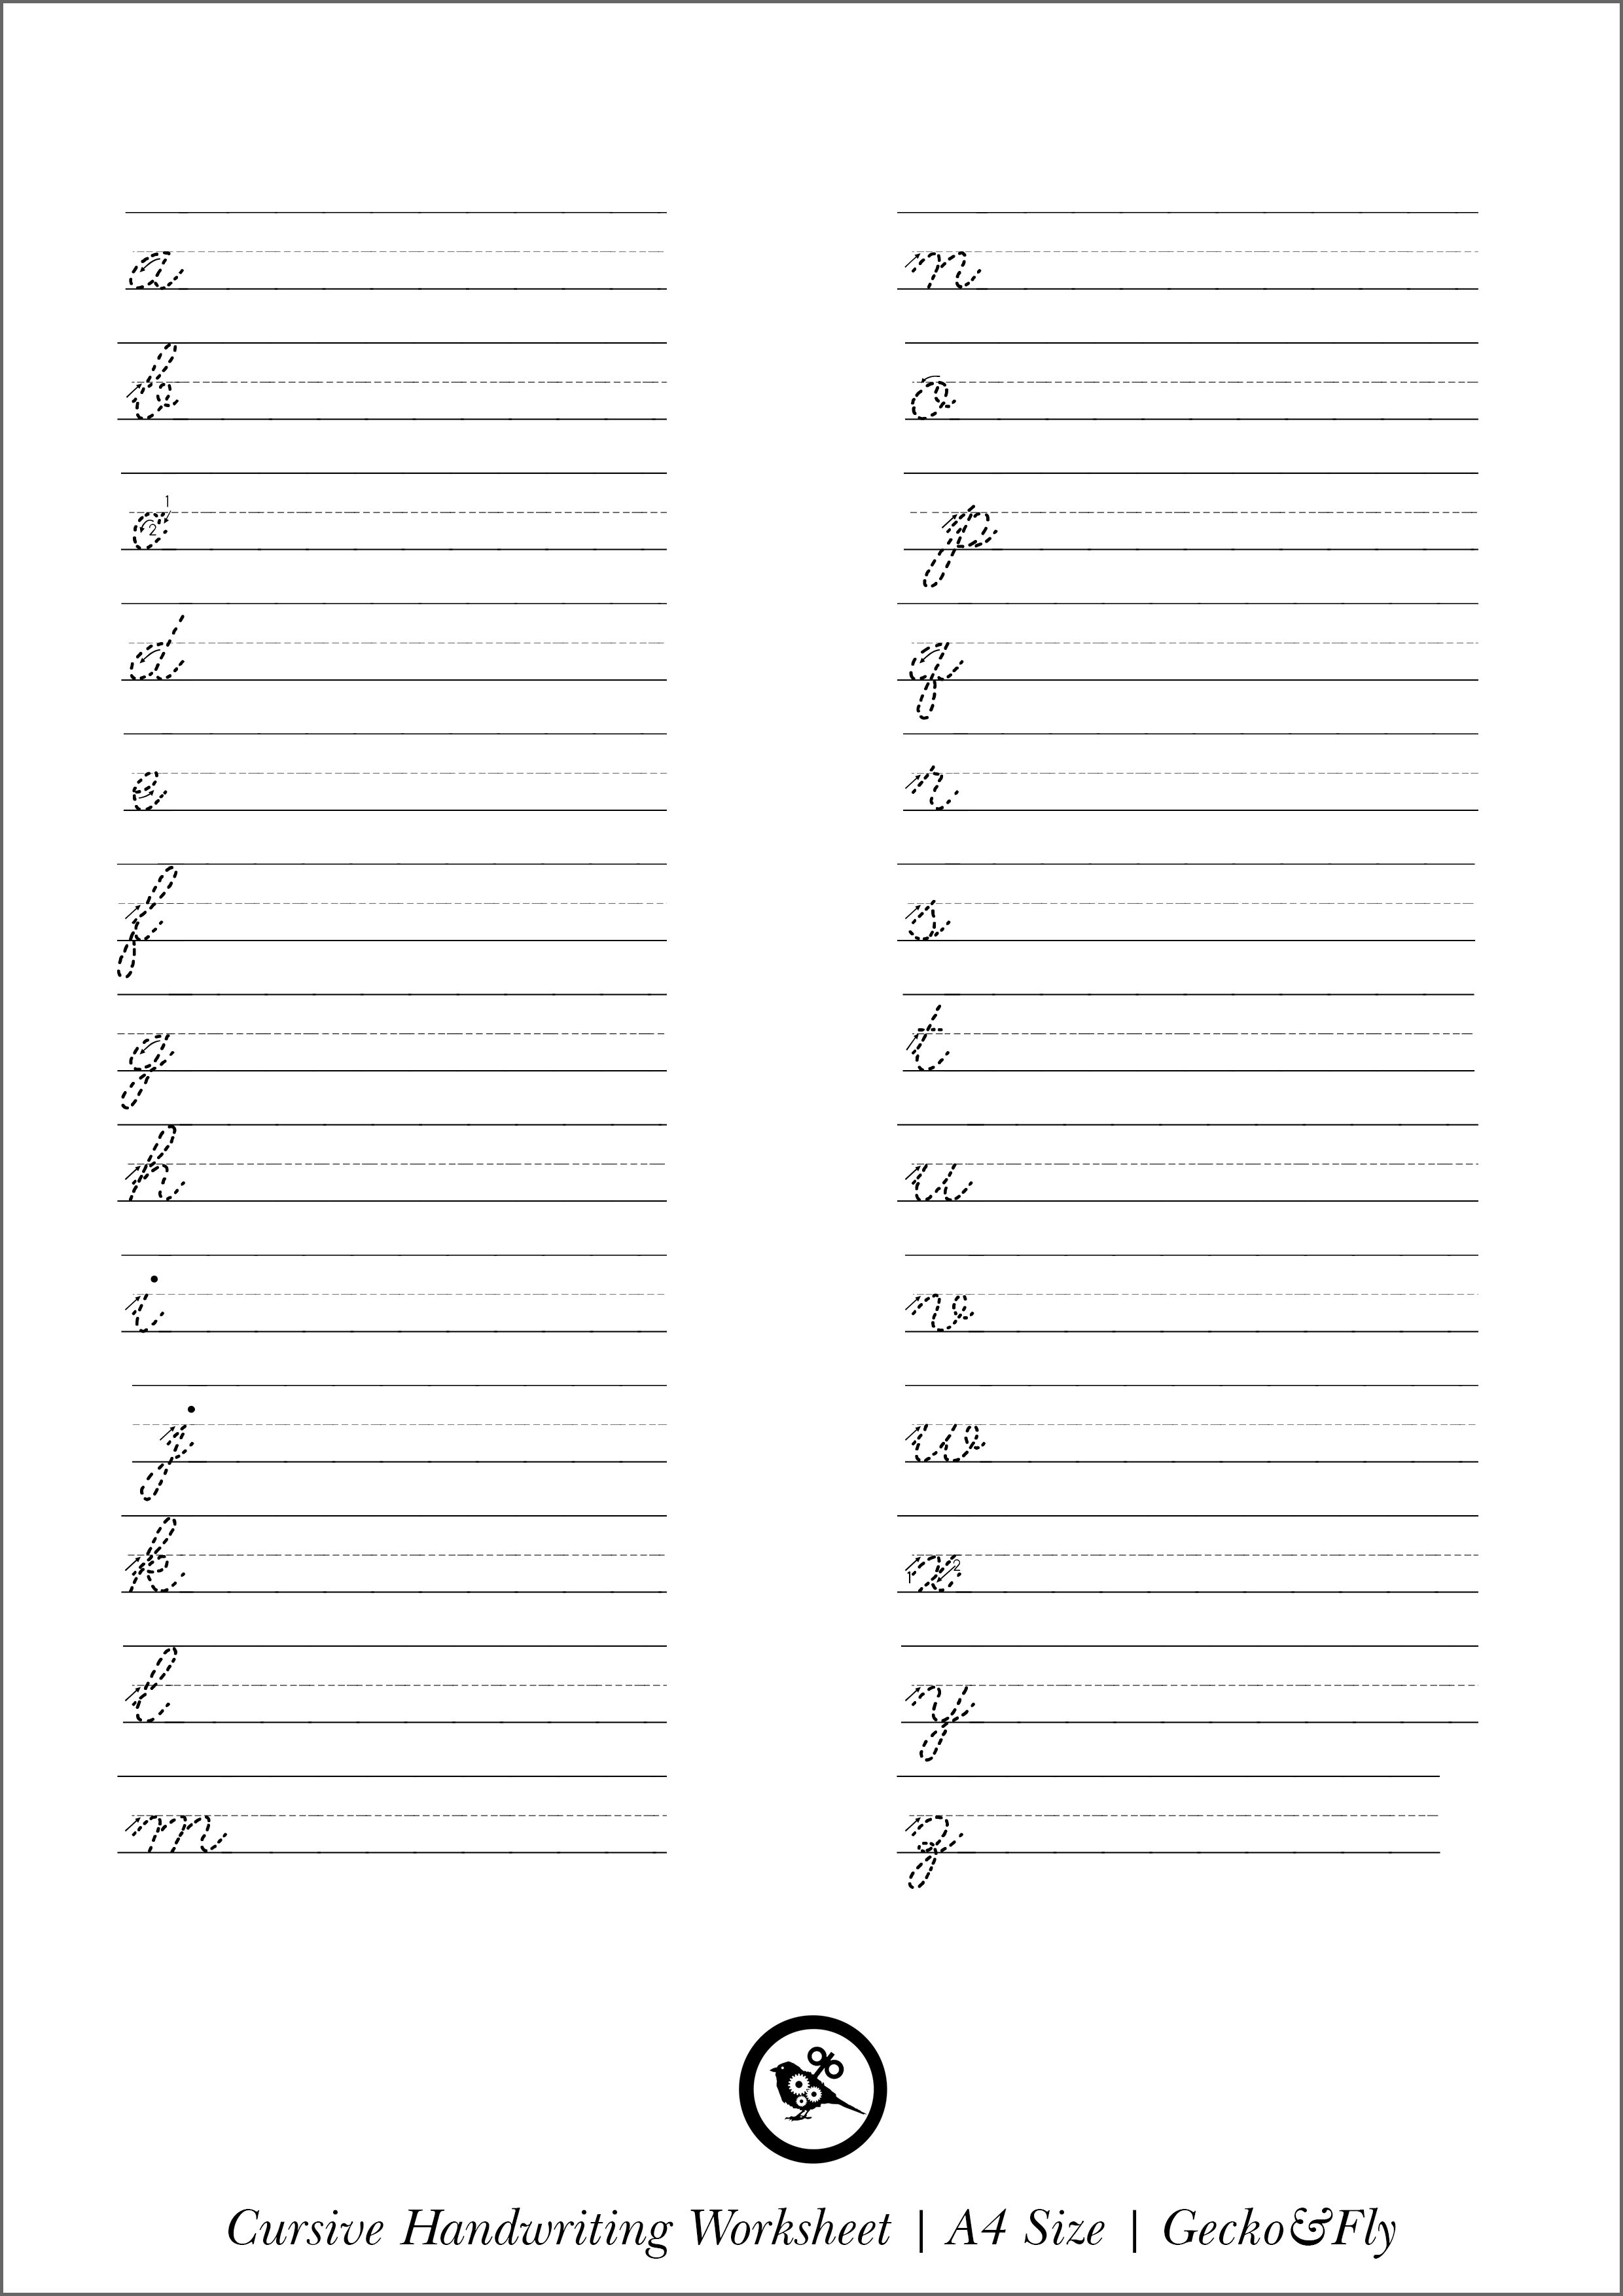 Free Printable Handwriting Sheets